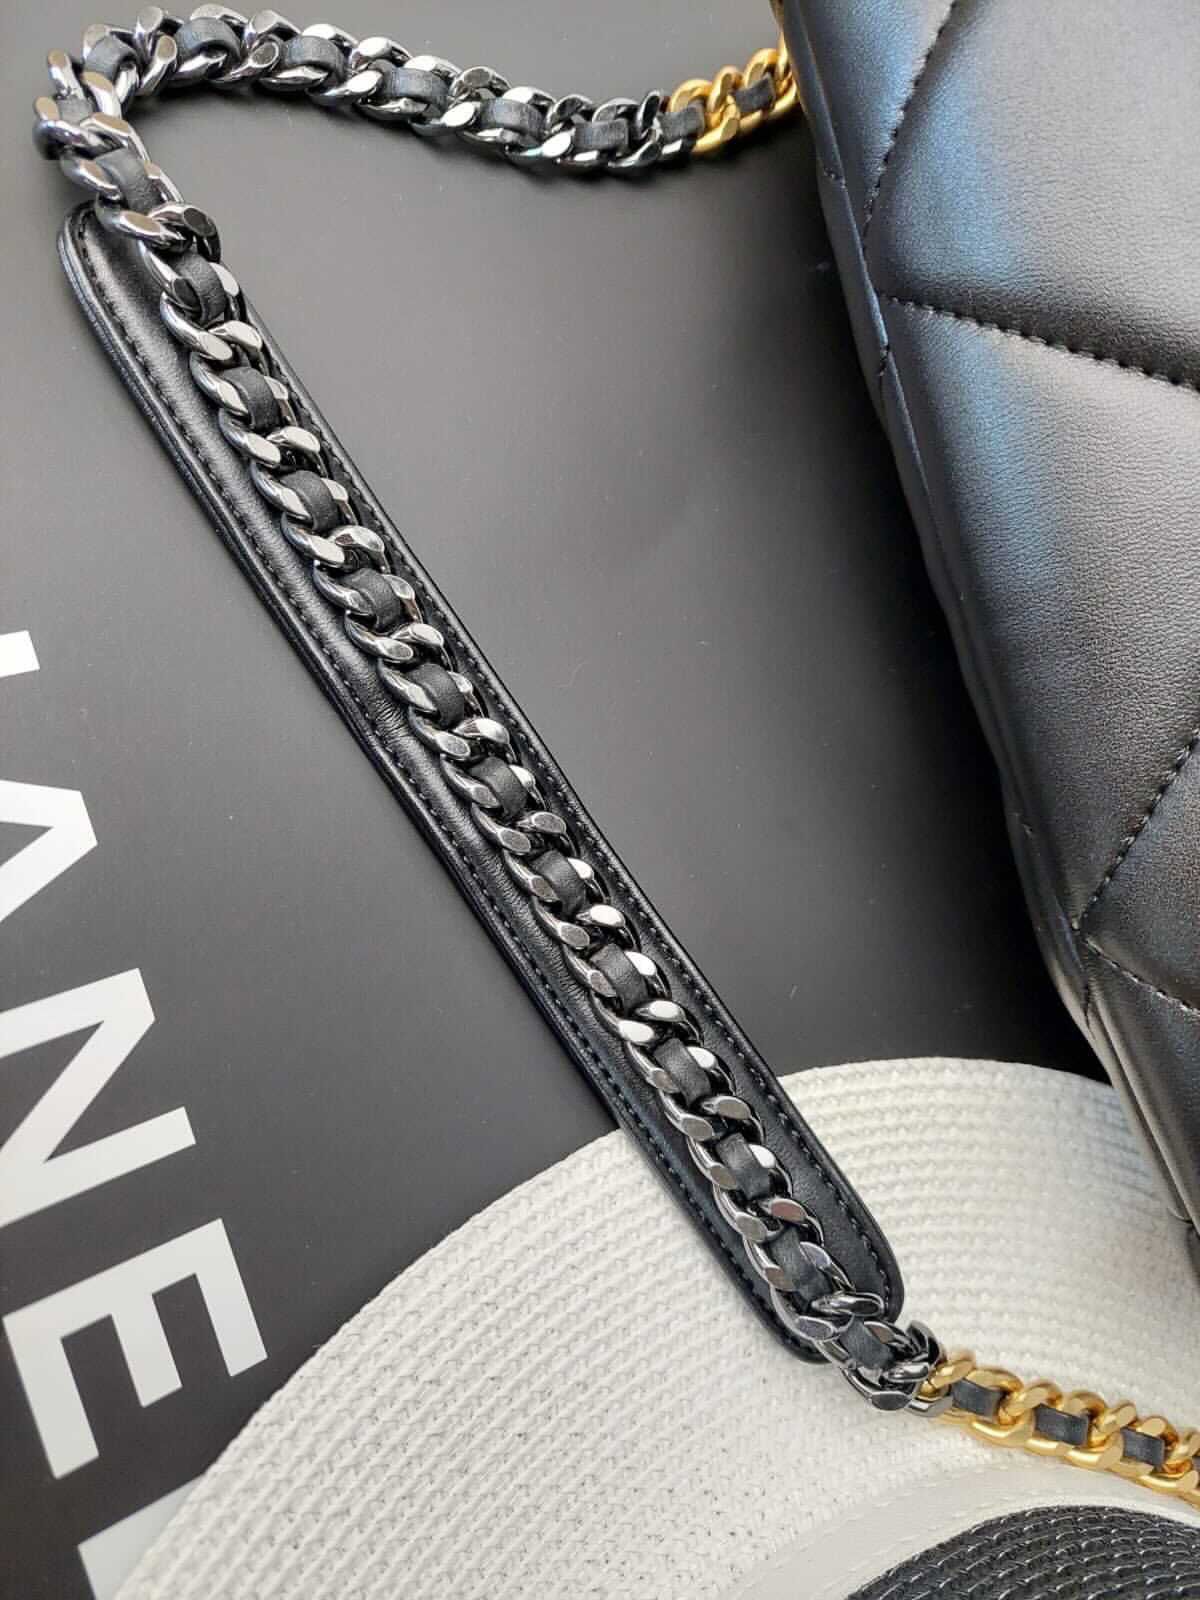 New Chanel Black Shoulder Bag, Includes Chanel Box,  VIP GIFT